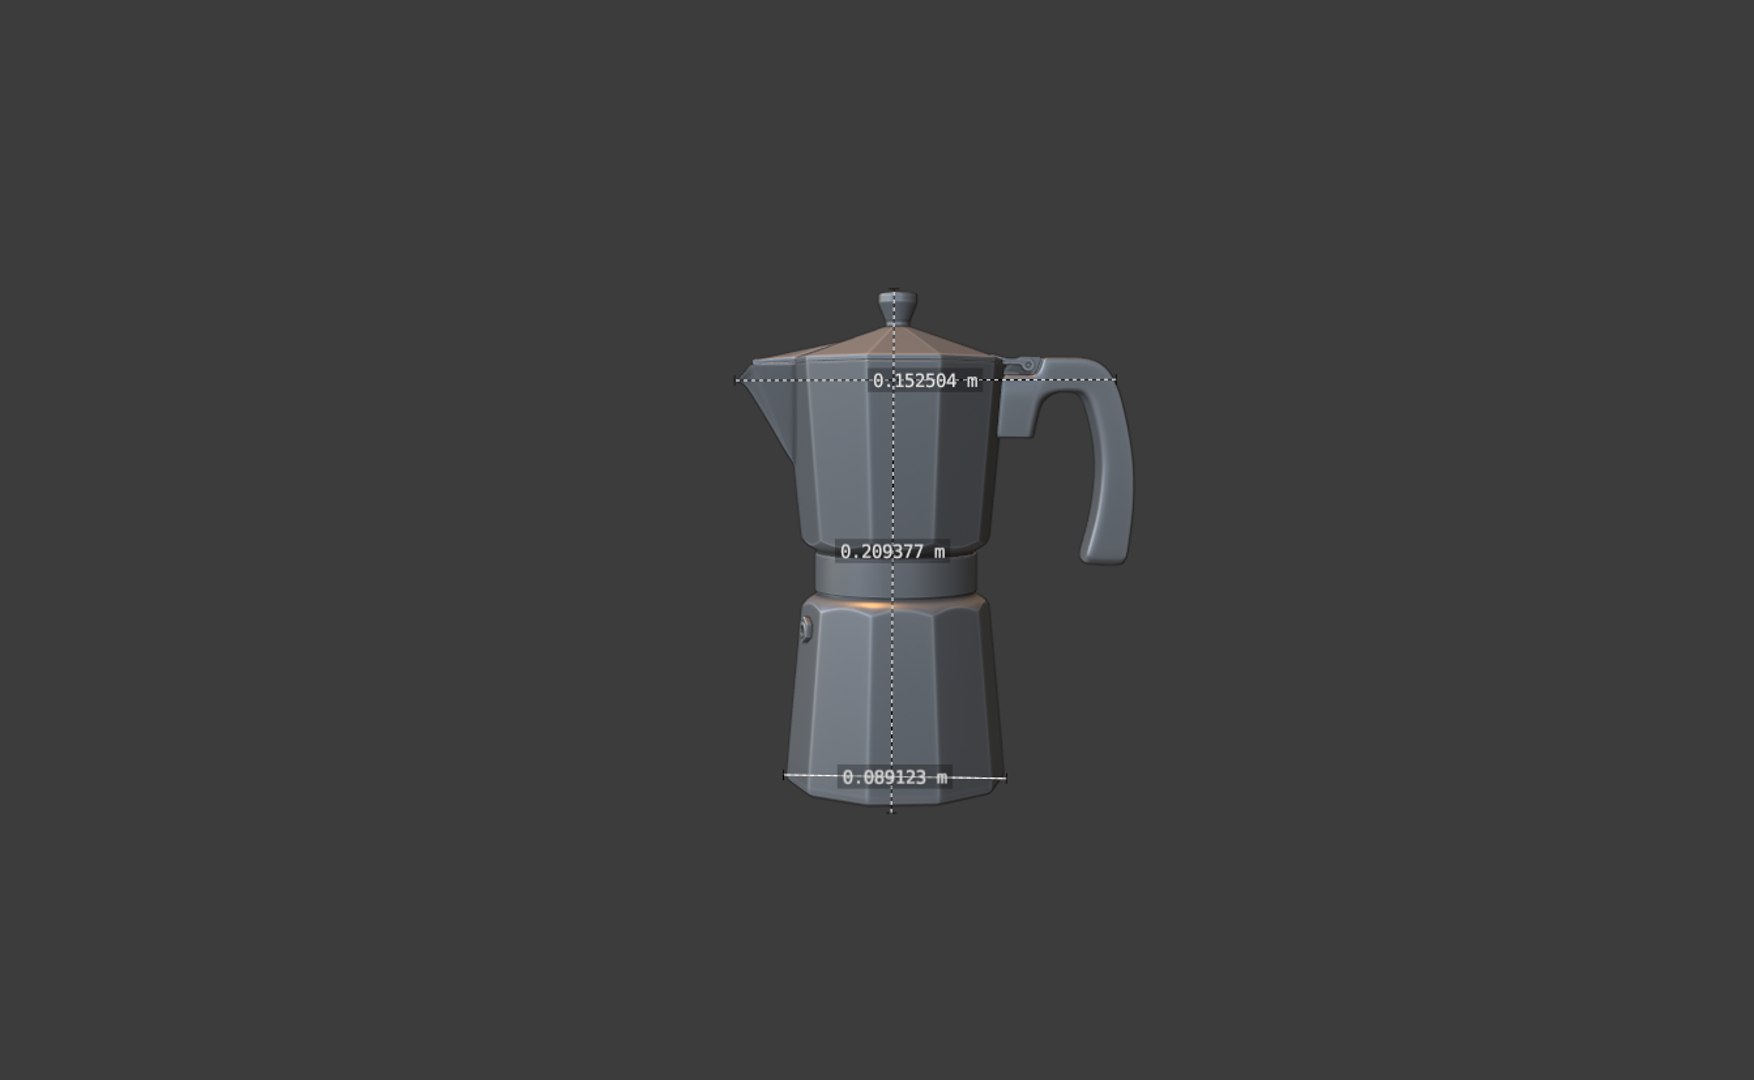 Moka Pot GROSCHE Milano Stovetop Espresso Maker Red 3D model